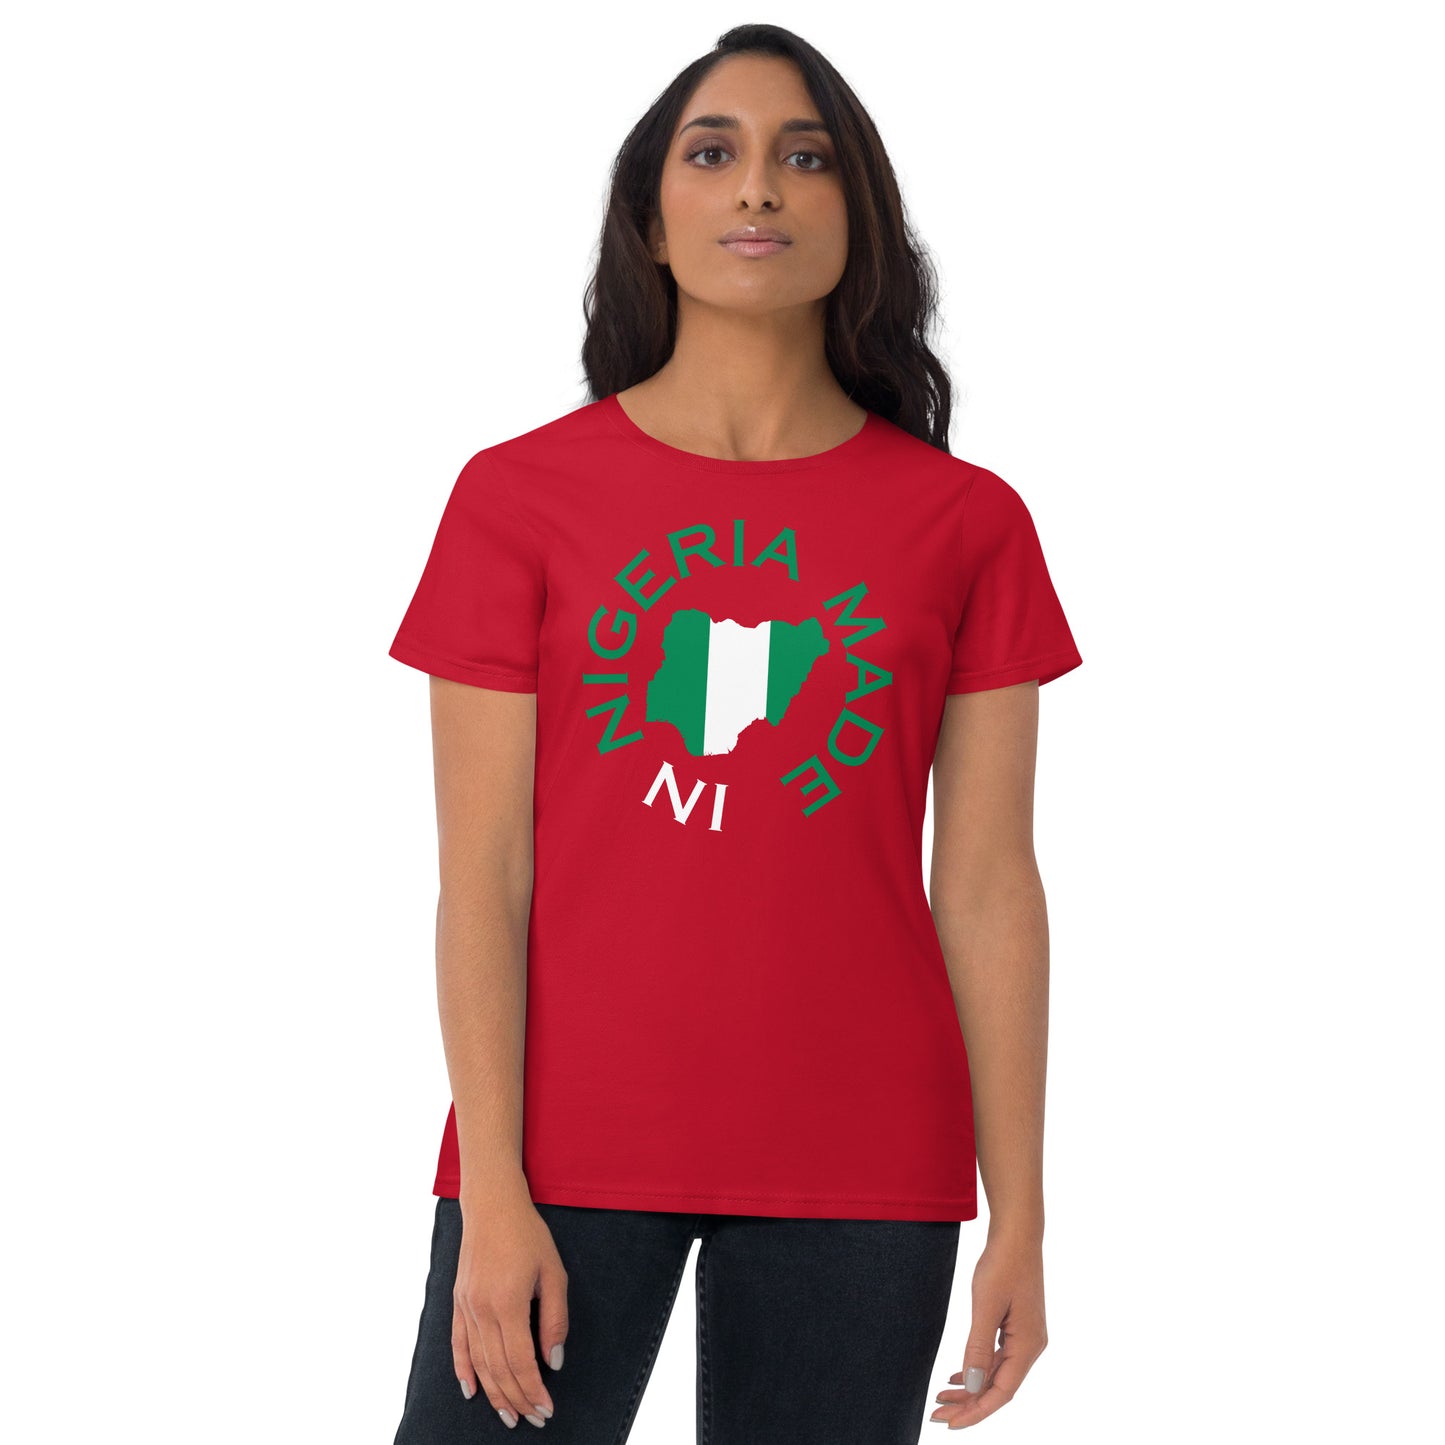 Made in Nigeria Women's T-shirt